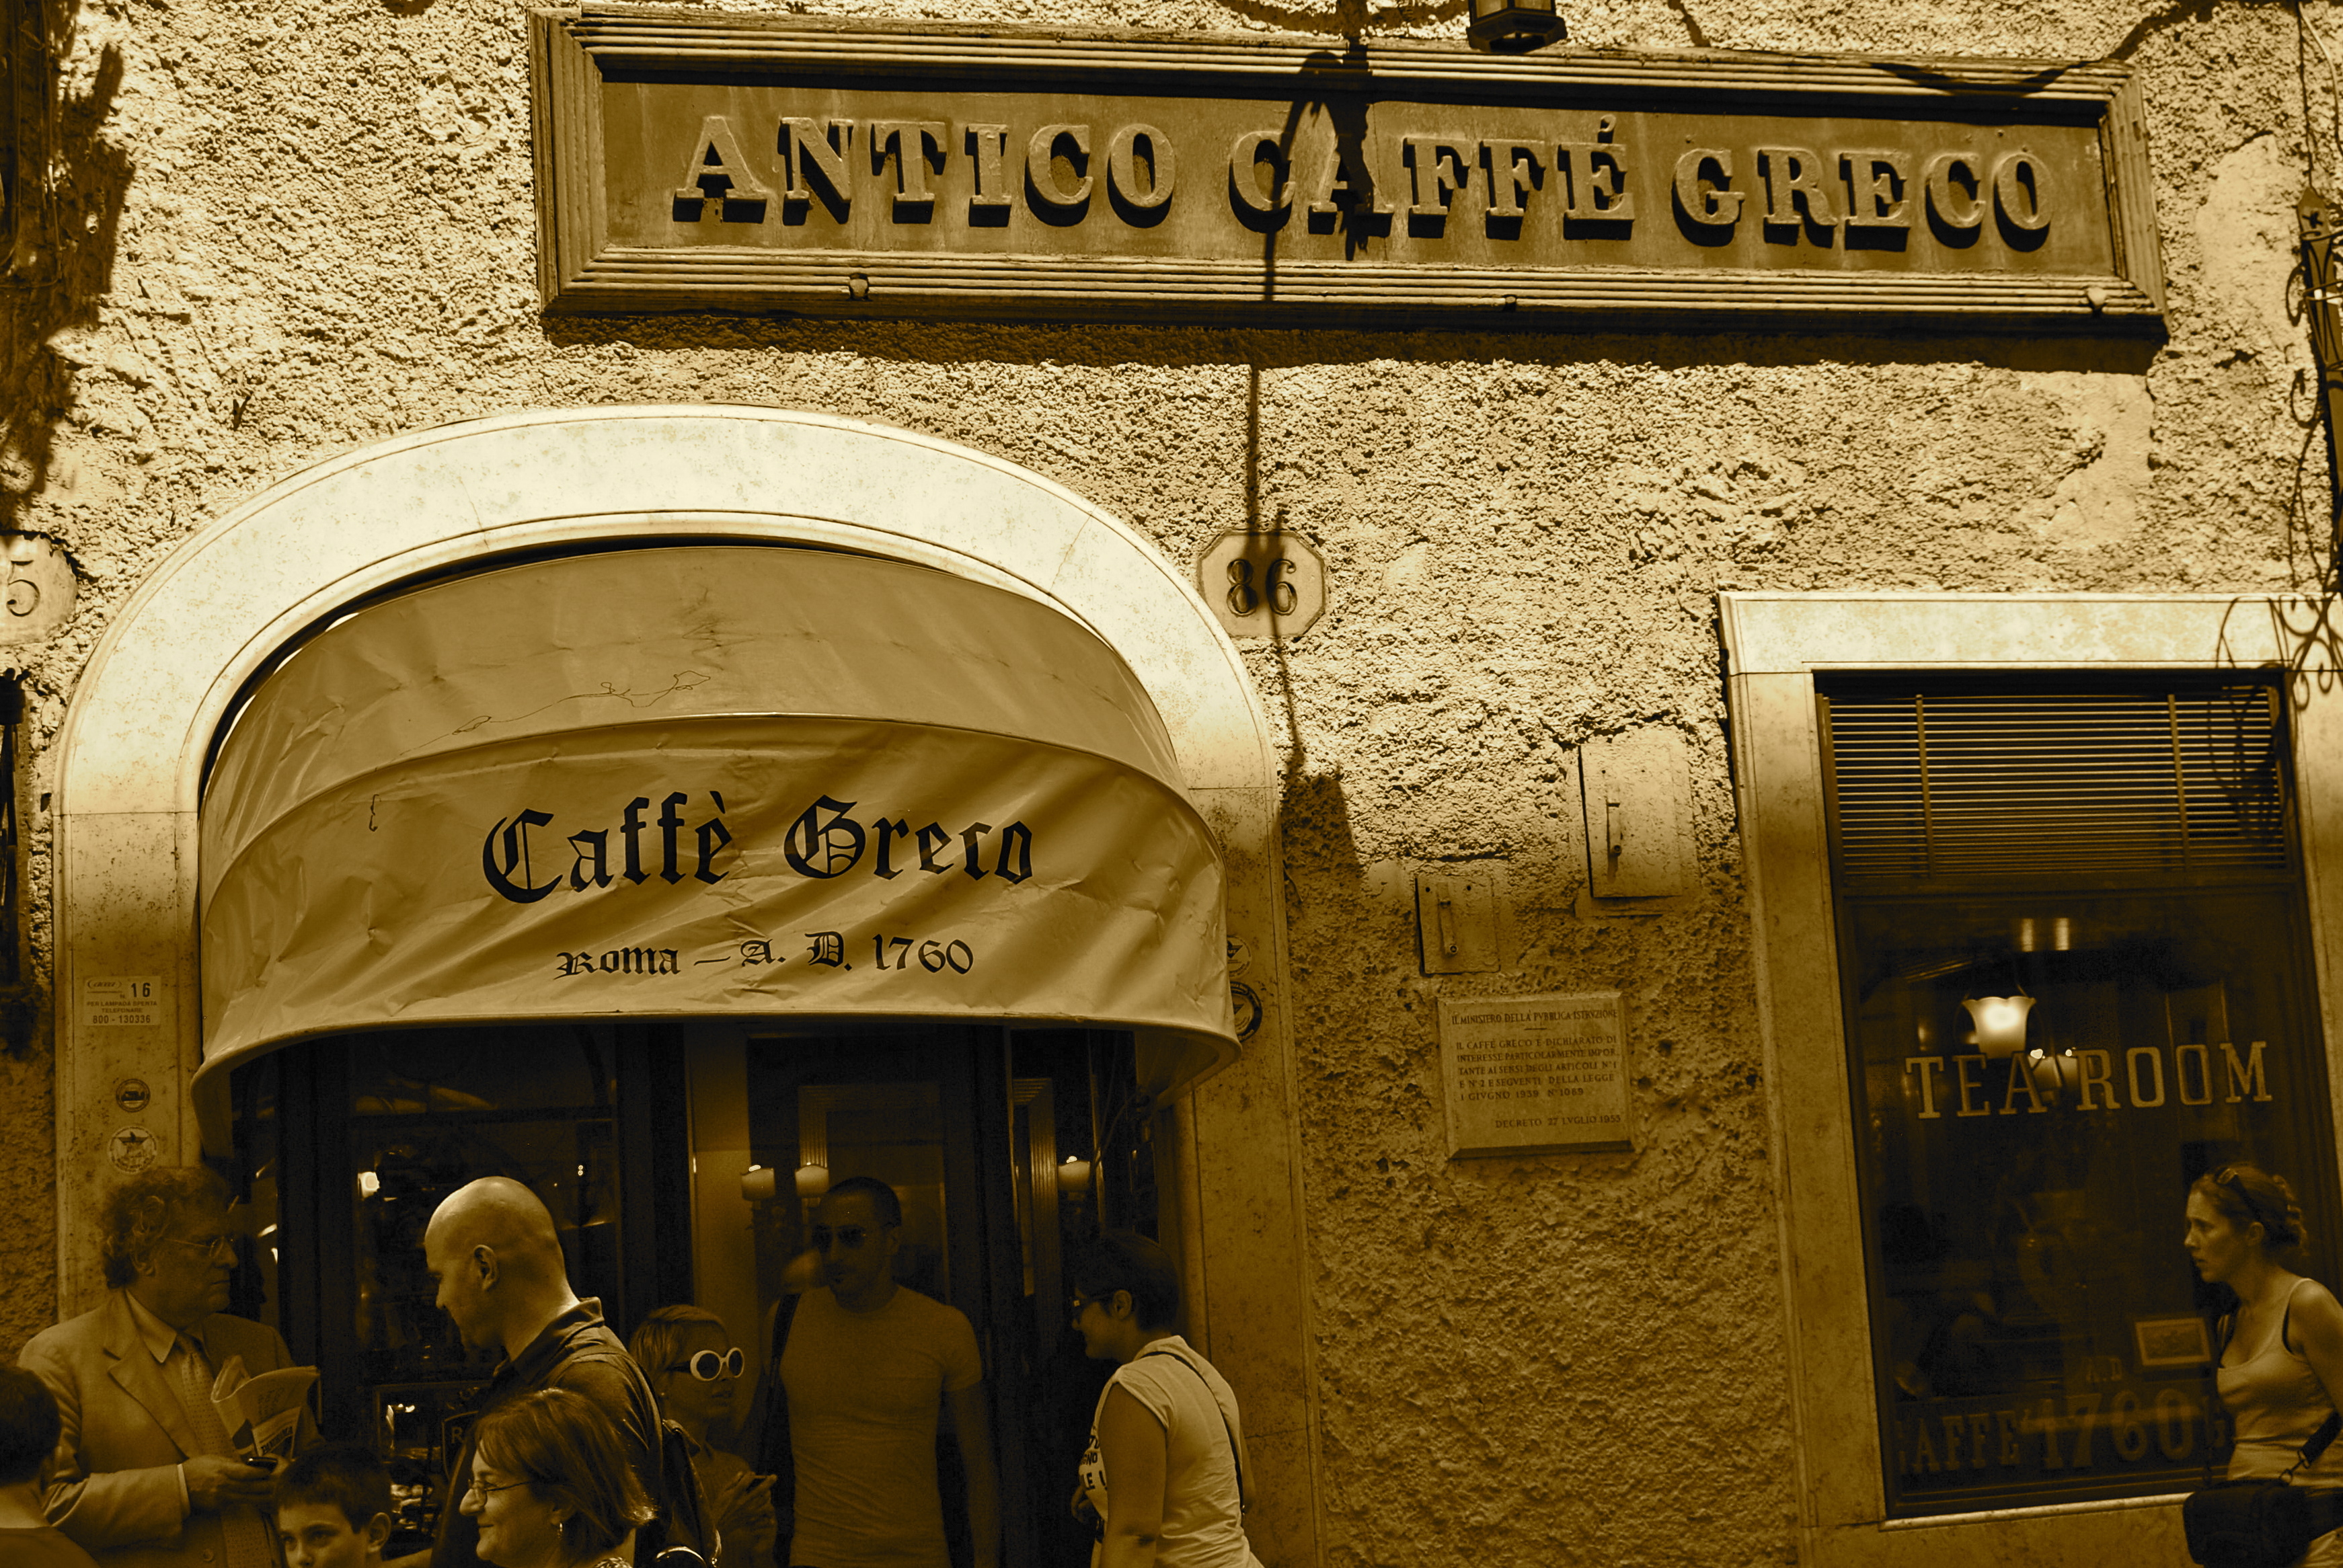 Cafe Greco,Rome - hinh anh nhung quan cafe dep nhat tren the gioi 